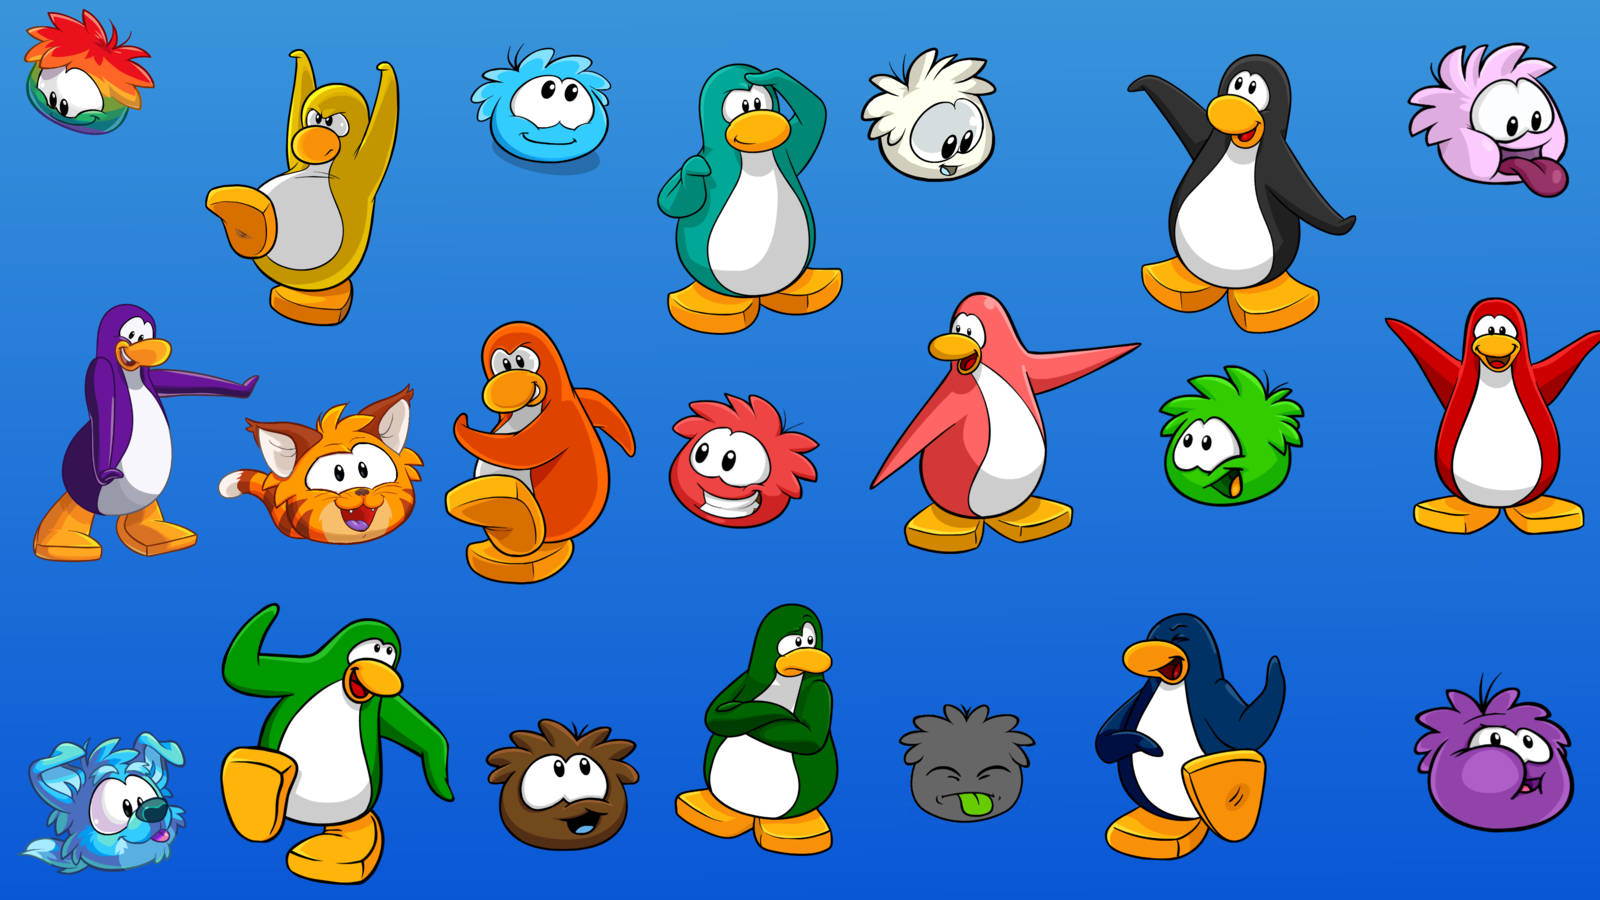 Magnificent Club Penguin Characters Wallpaper